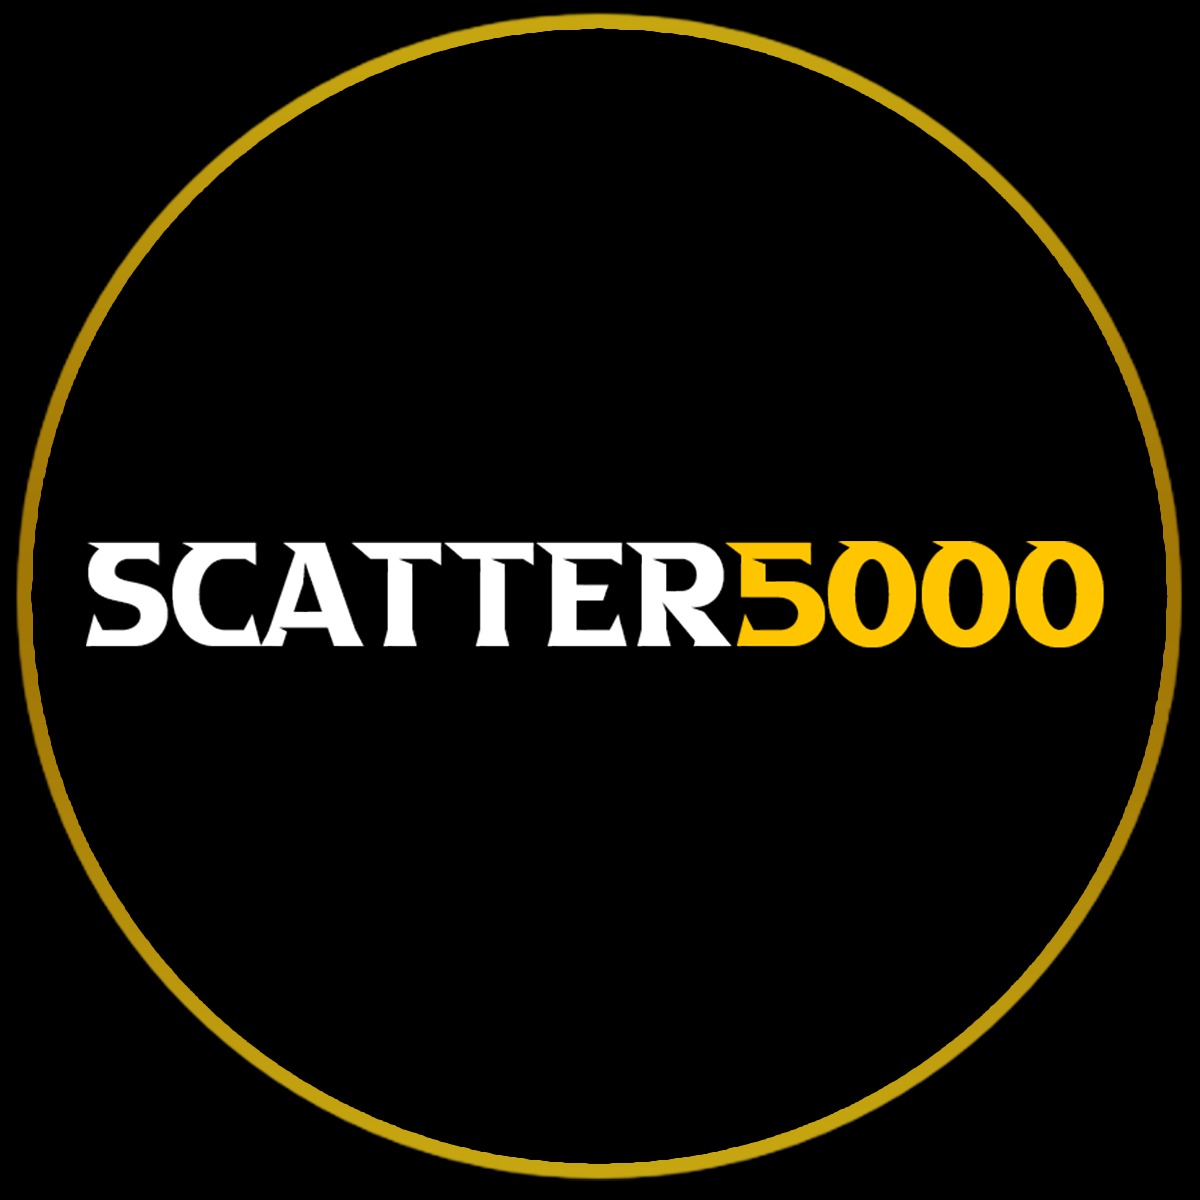 Scatter5000